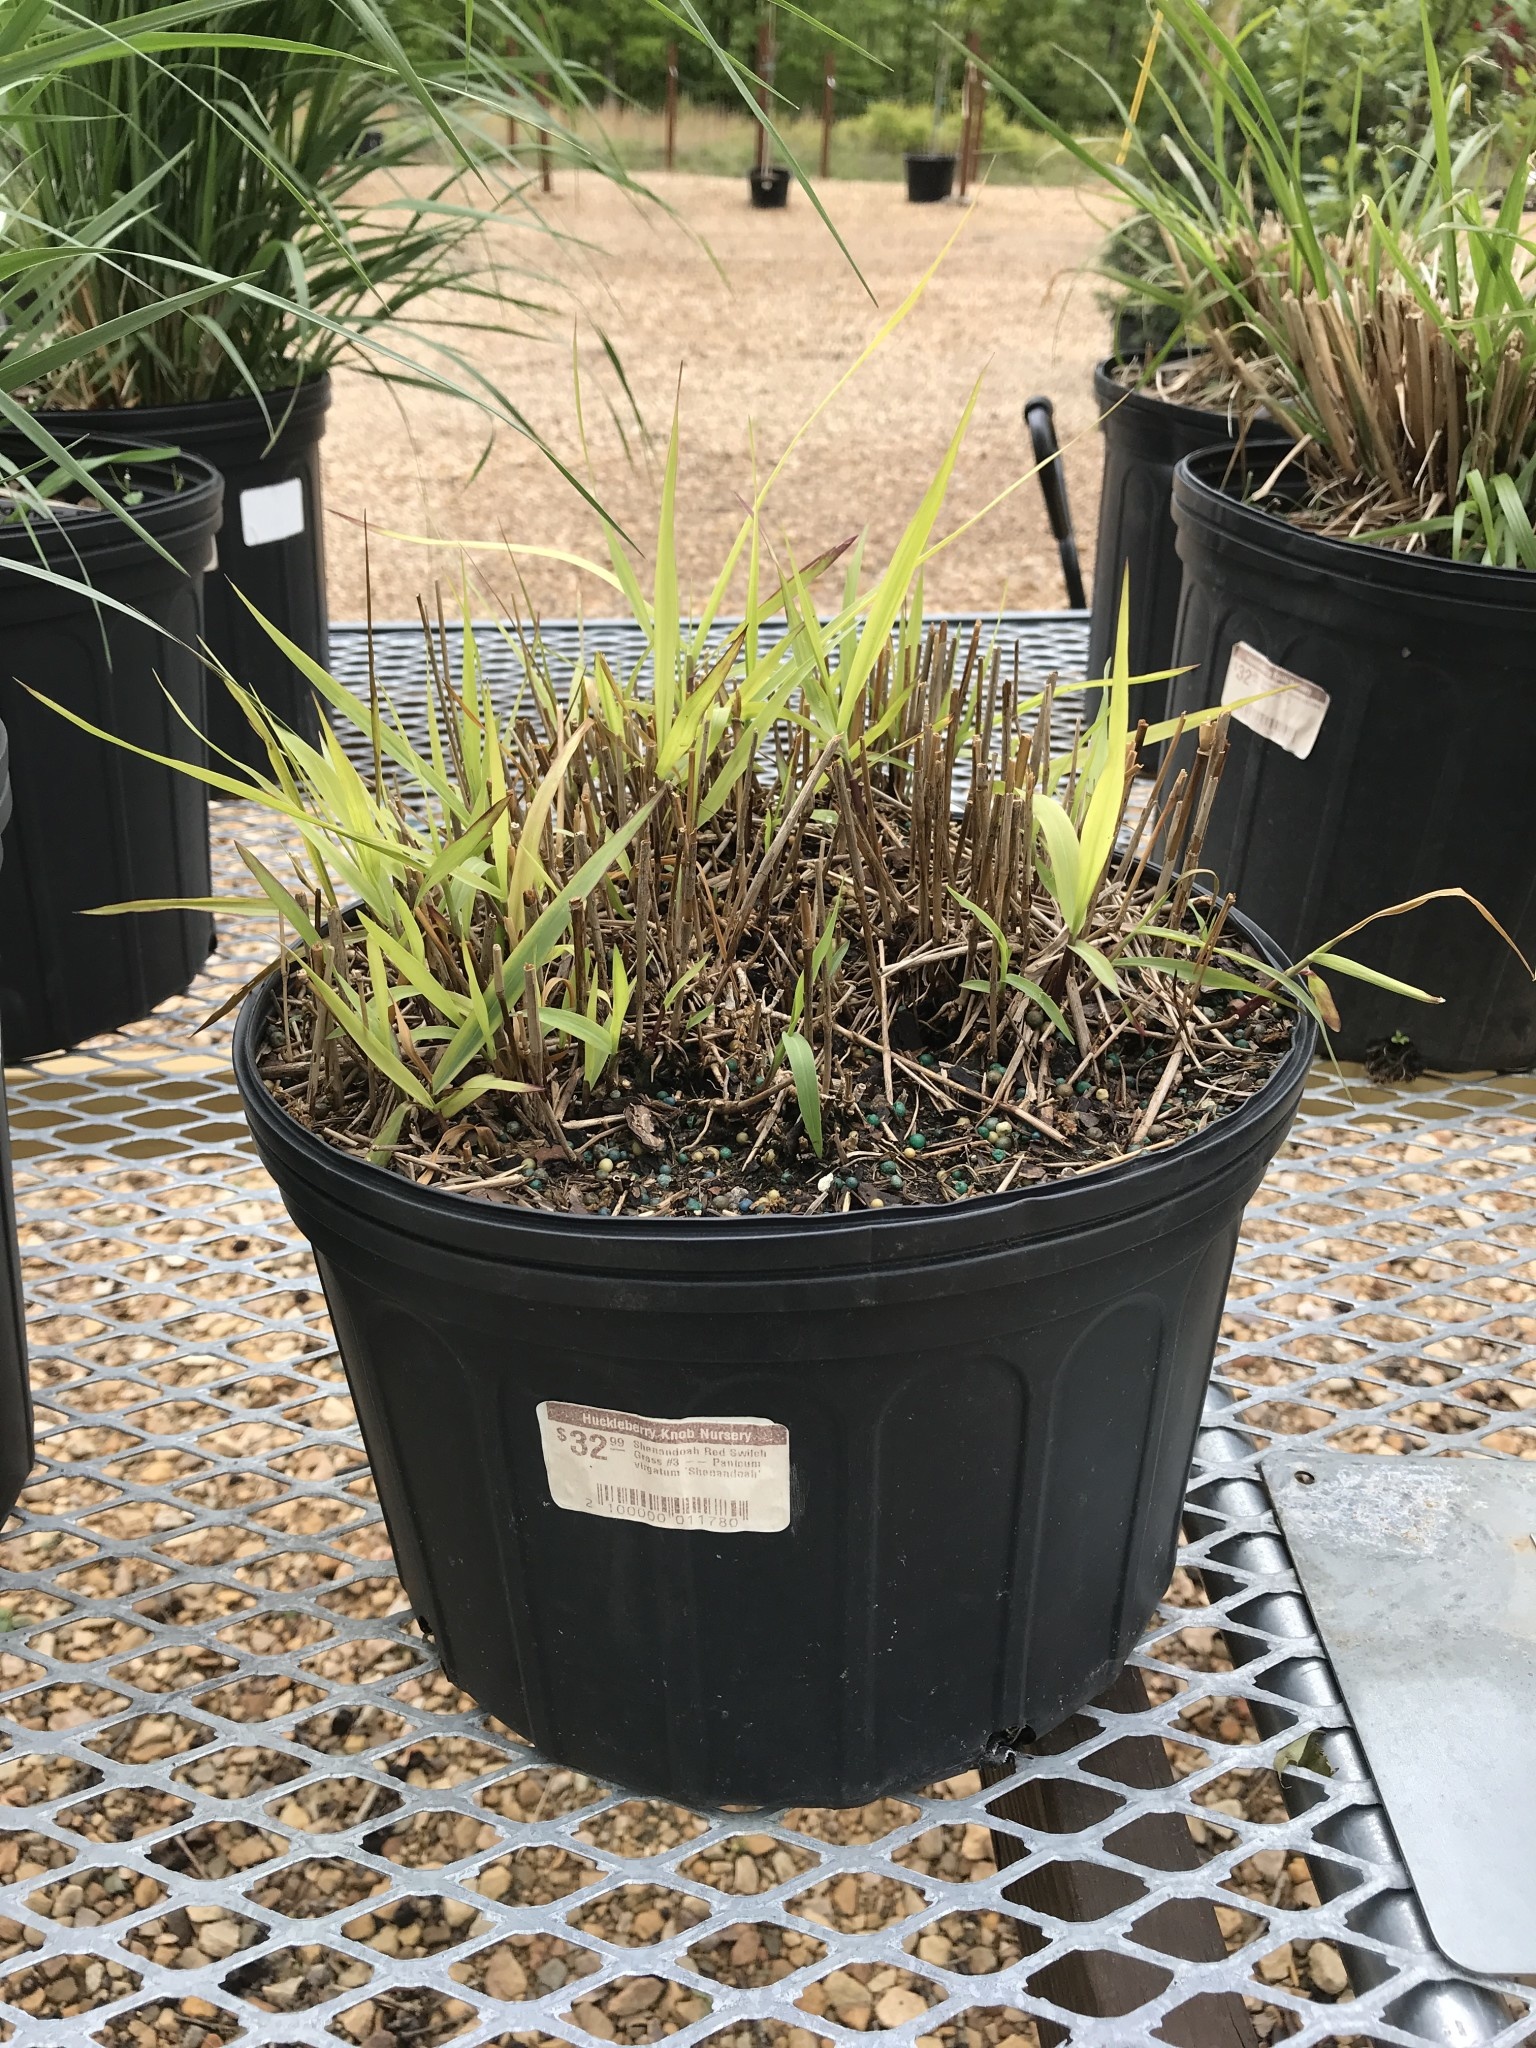 Shenandoah Red Switch Grass #3 -- Panicum virgatum 'Shenandoah'